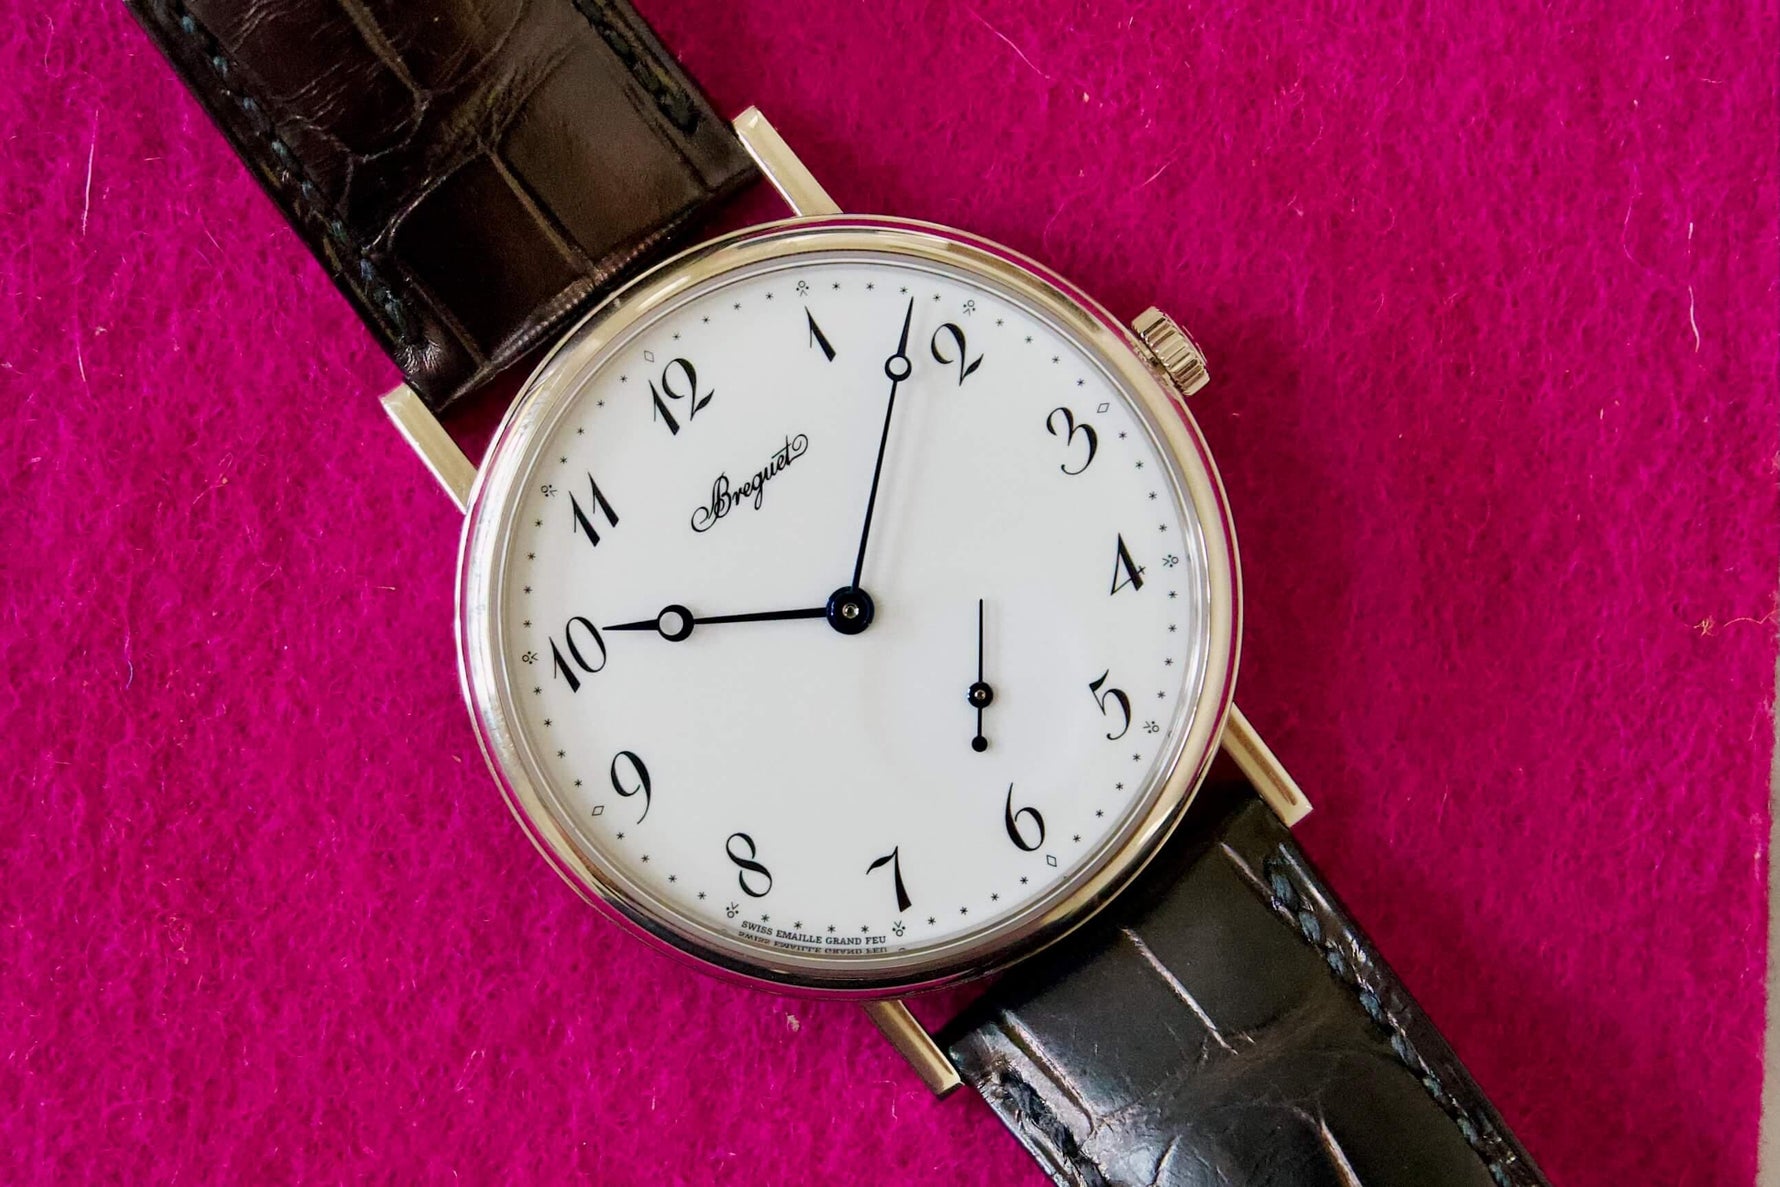 Breguet Classique Automatic Grand Feu Enamel Men's Watch 7147BB/29/9WU White Gold Papers - WearingTime Luxury Watches